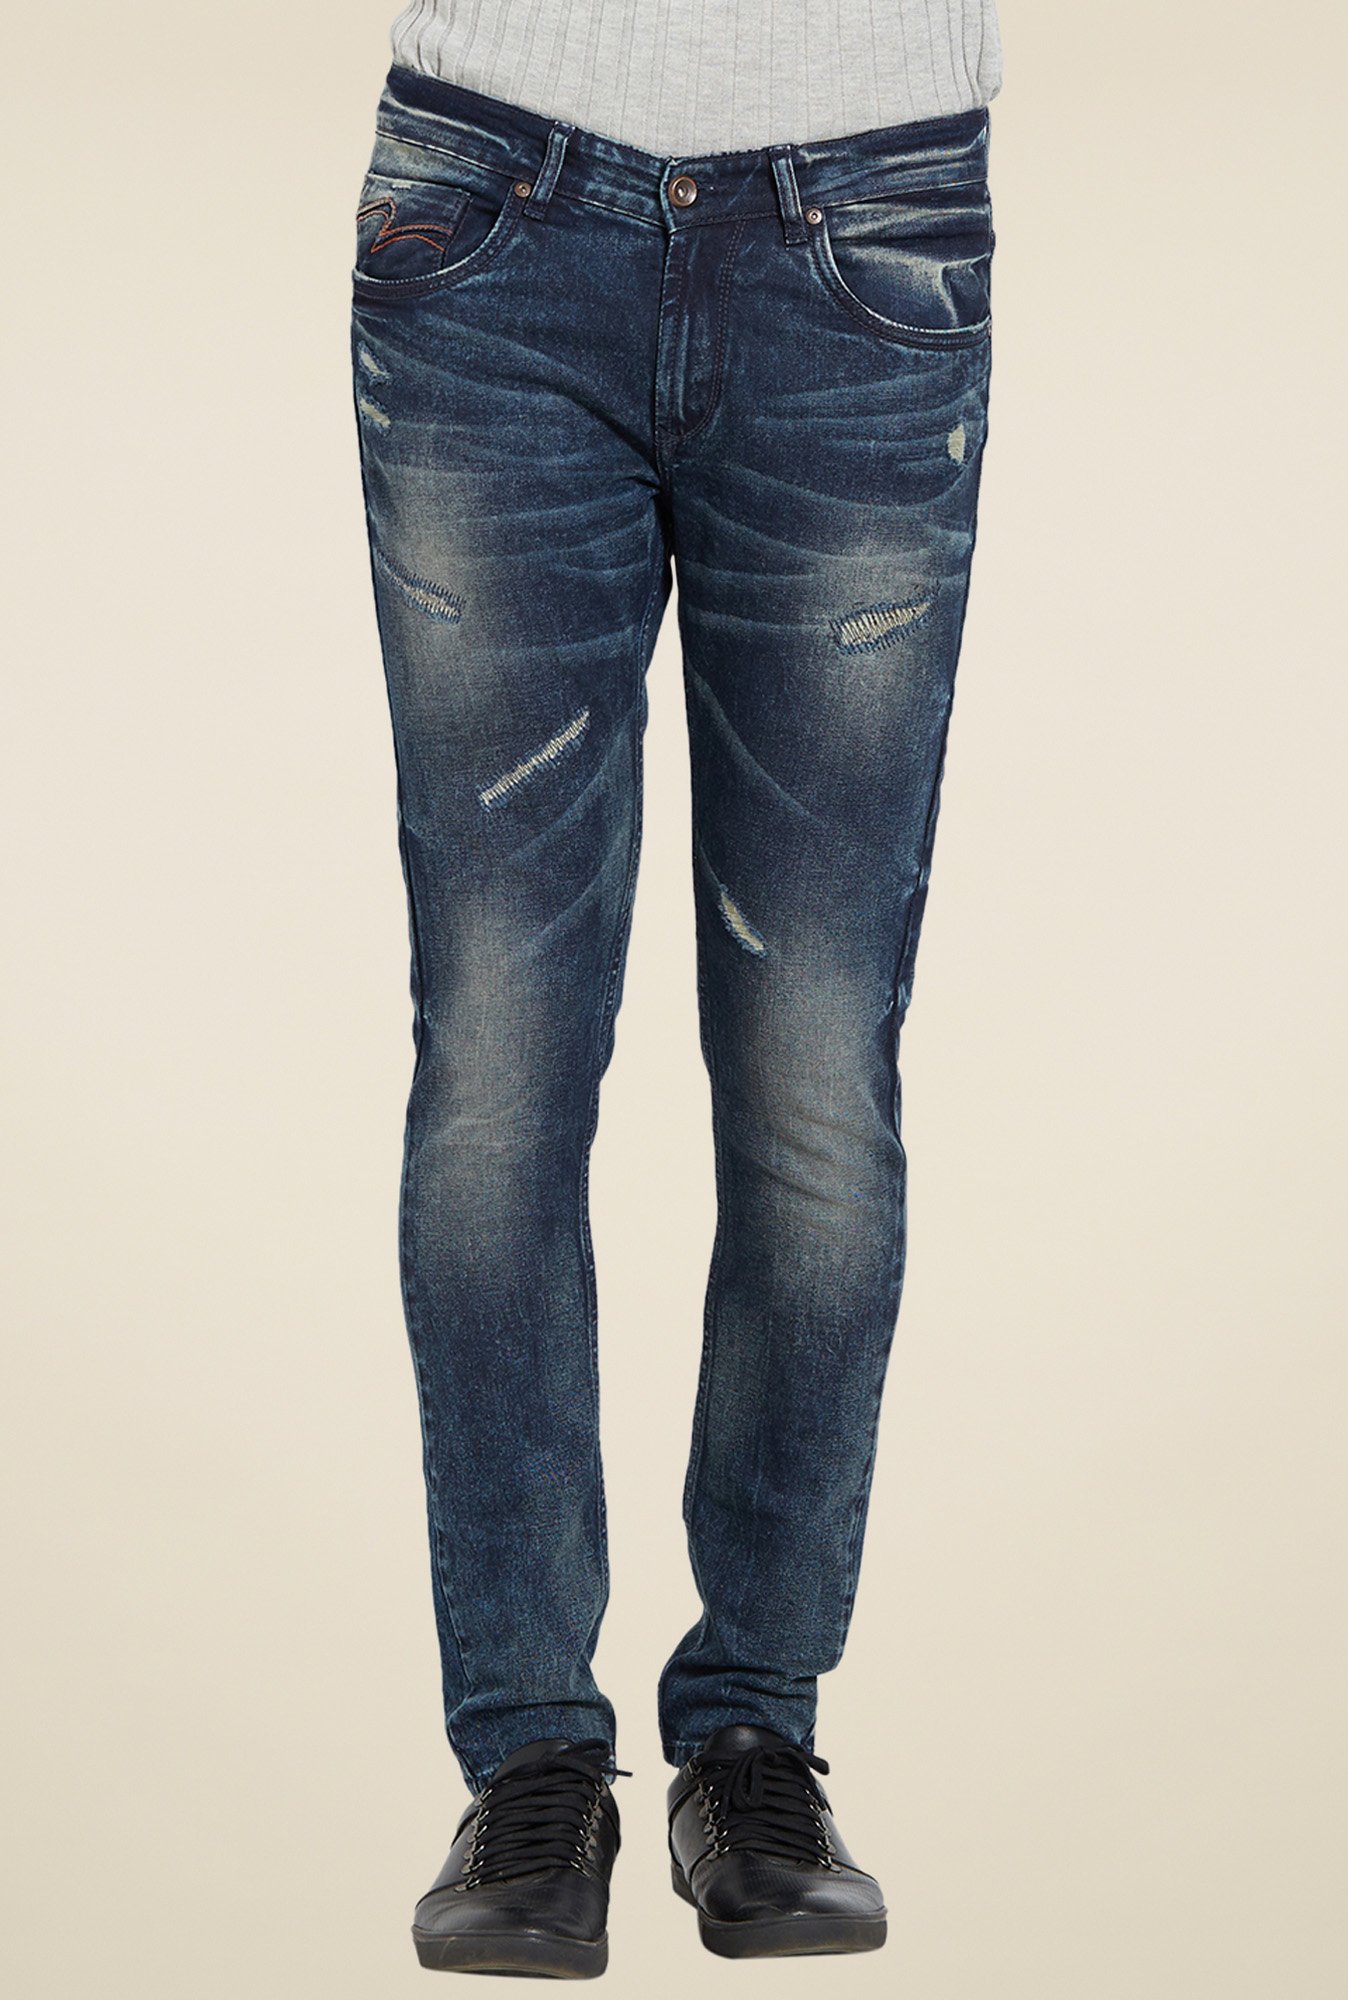 spykar dark blue jeans